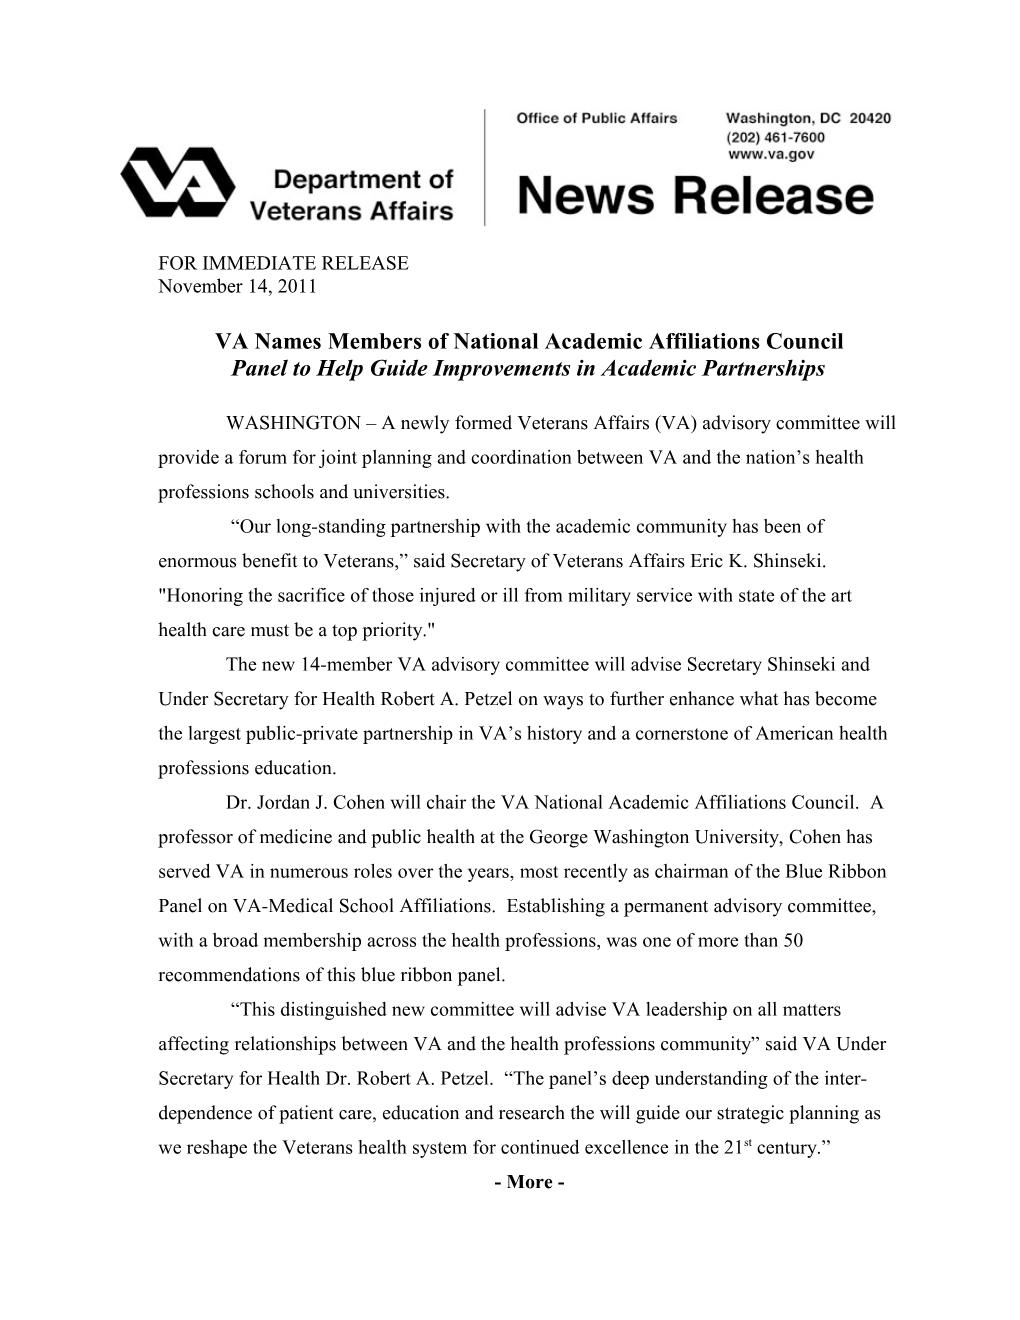 VA Names Members of National Academic Affiliations Council